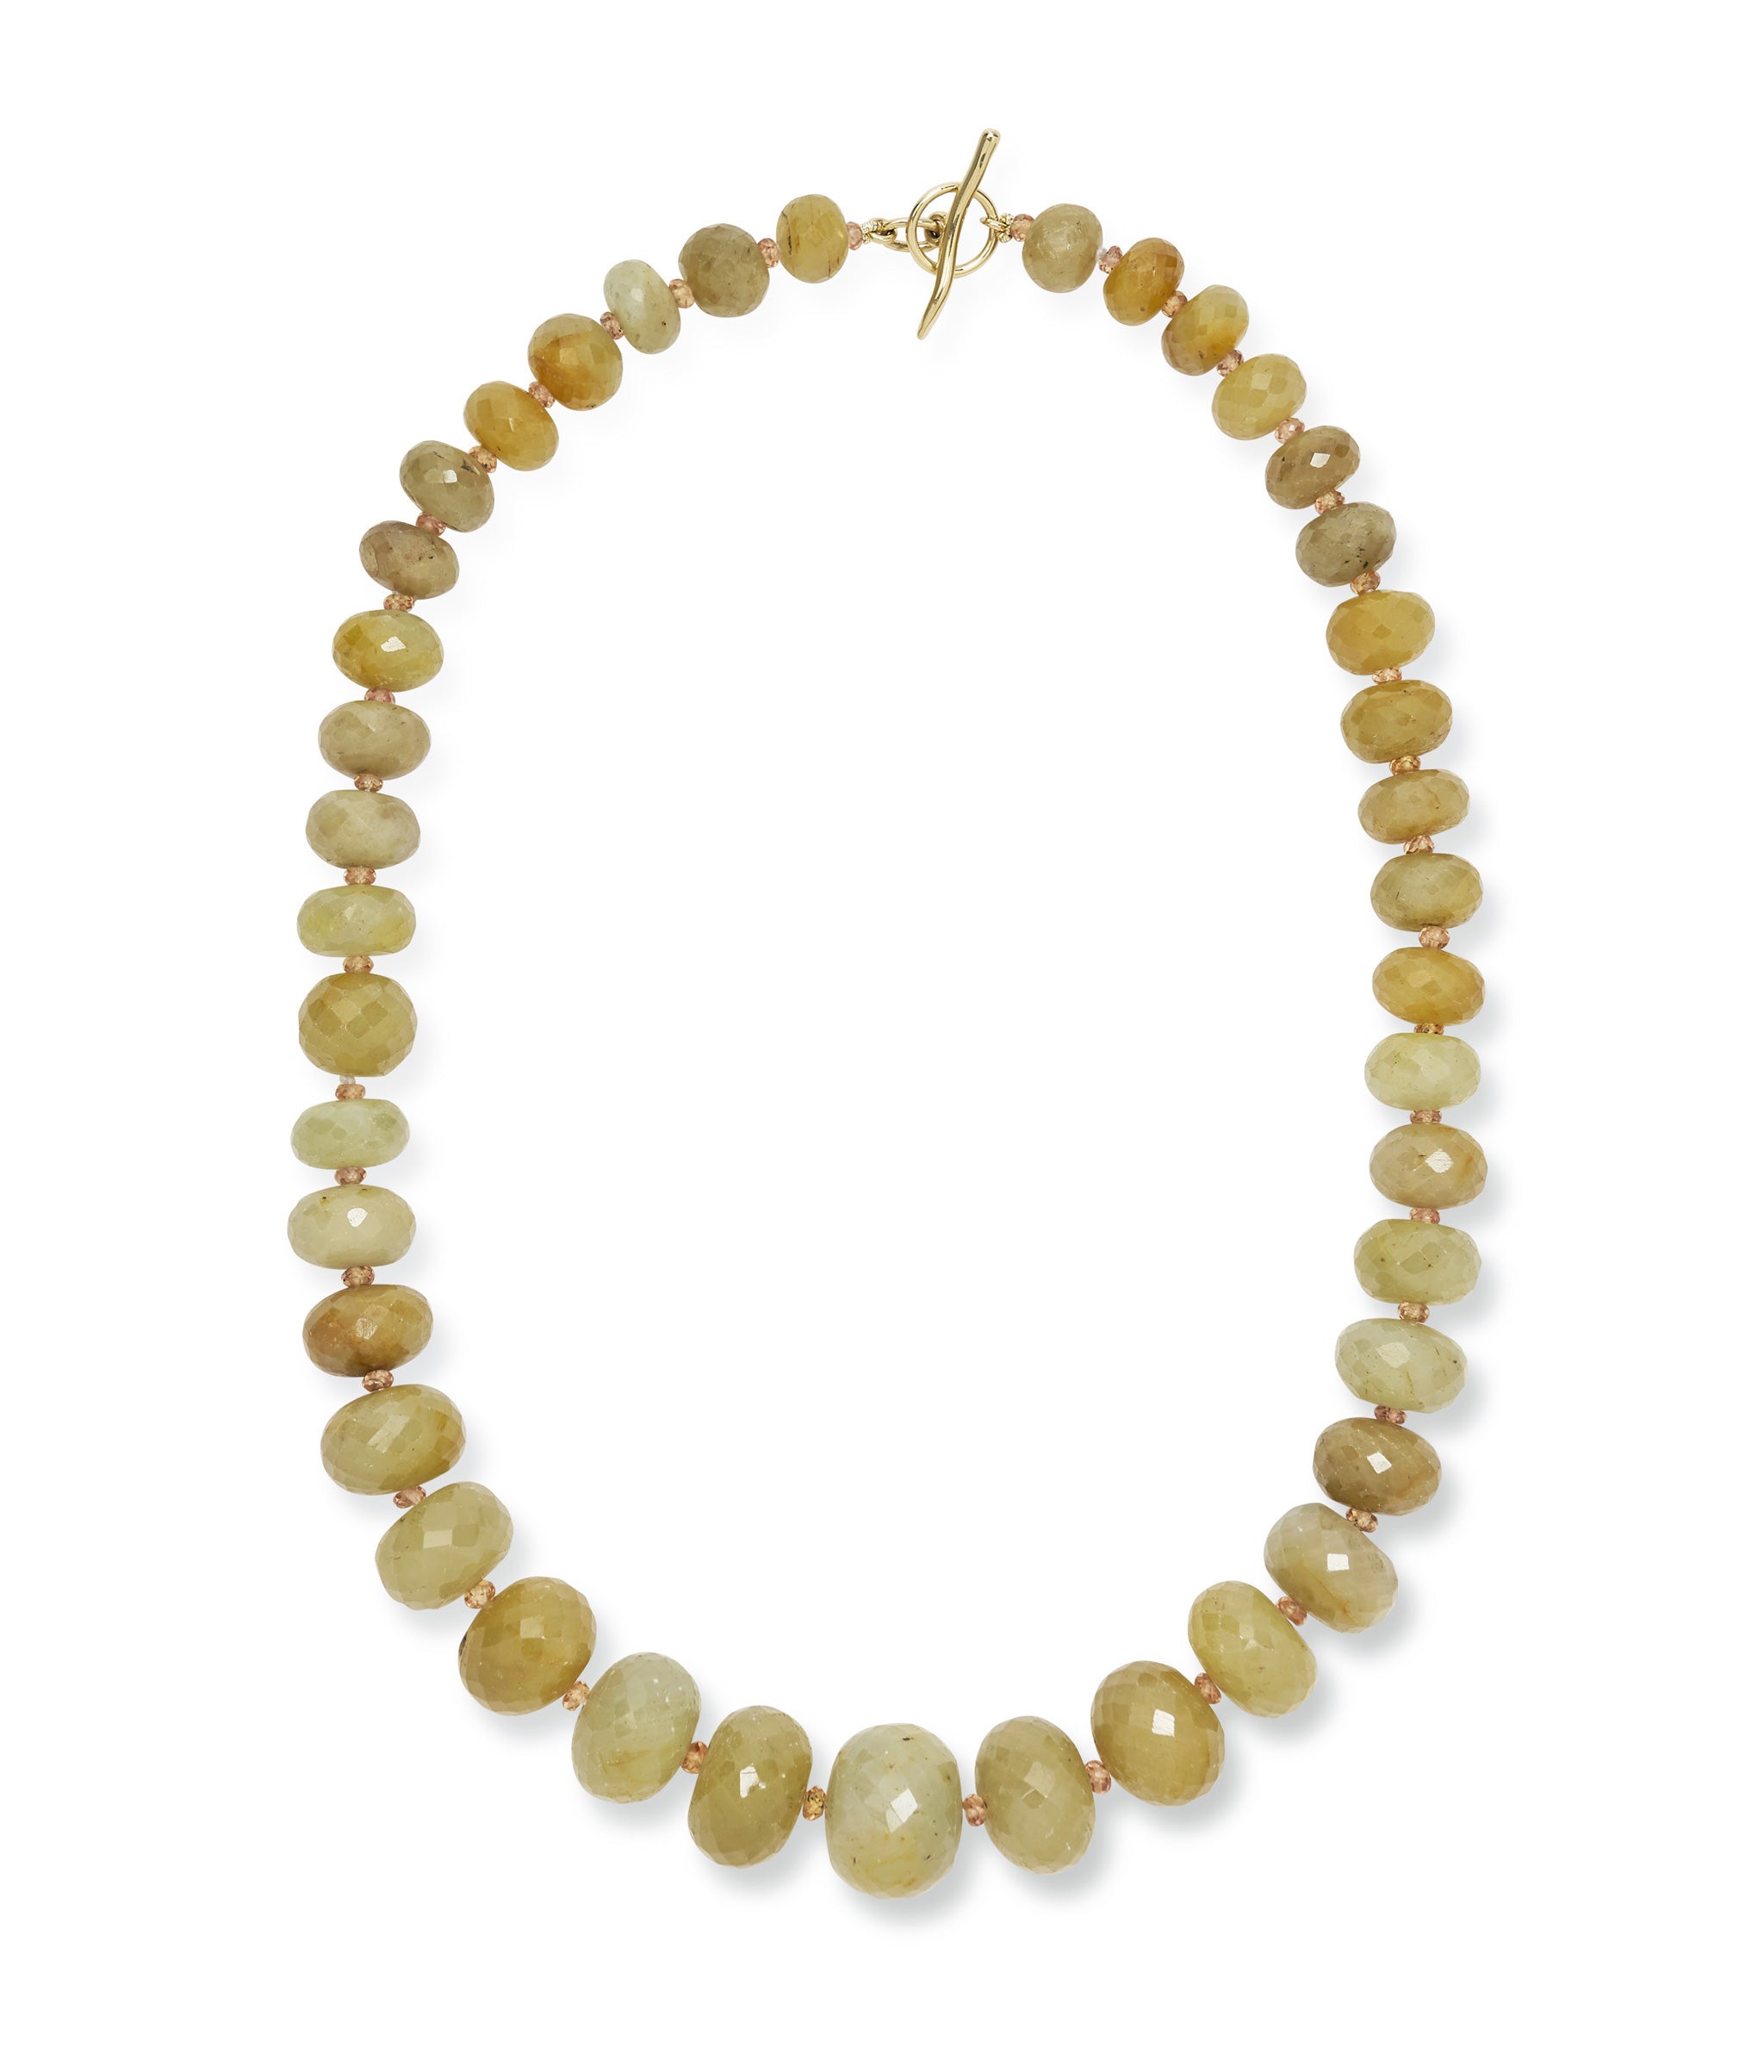 Large Graduated Yellow Sapphire & 14k Gold Necklace. Faceted yellow sapphire bead strand with gold toggle closure.